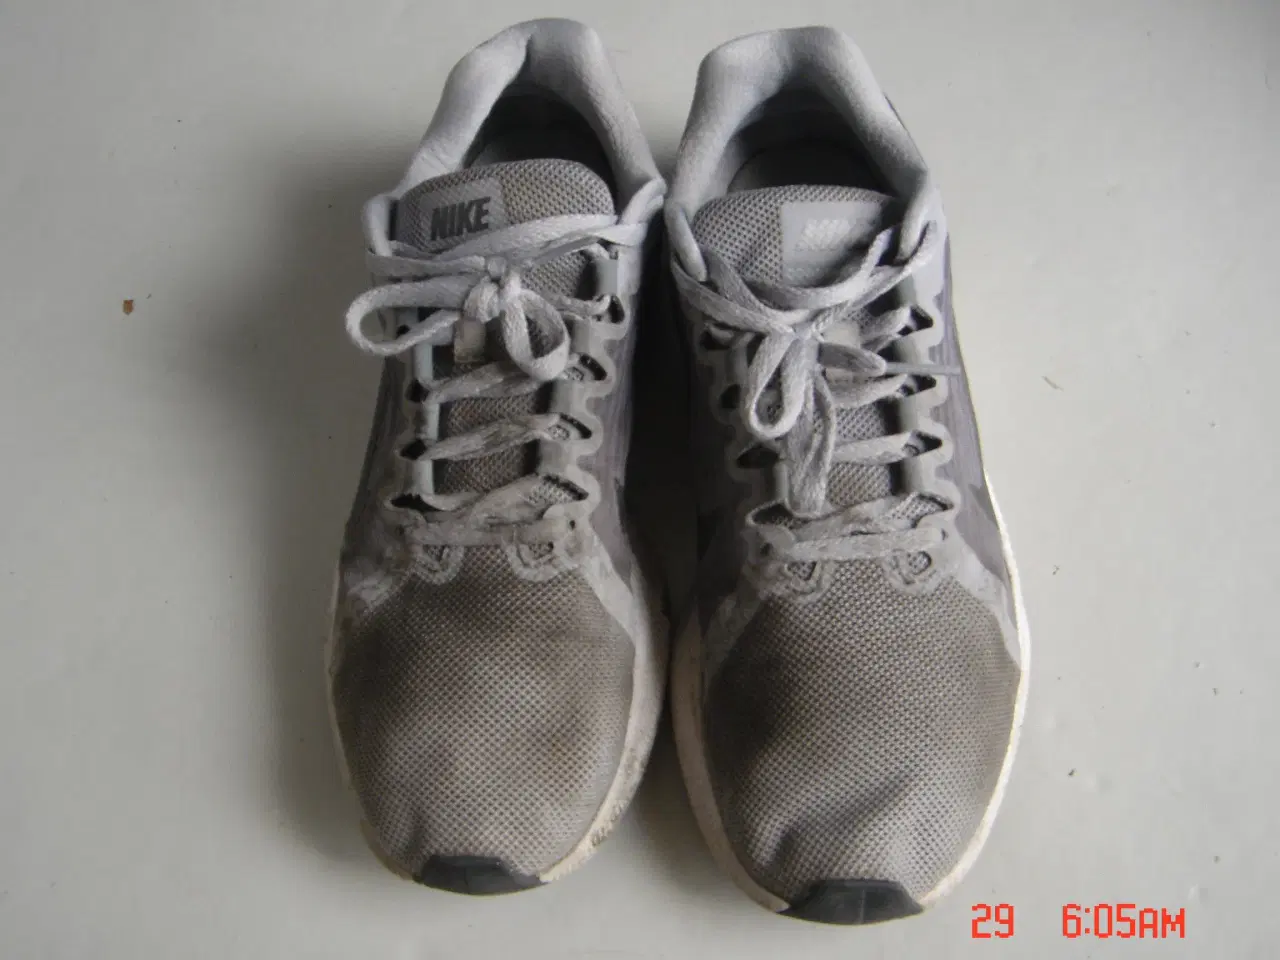 Billede 4 - 2 par ens Nike sko